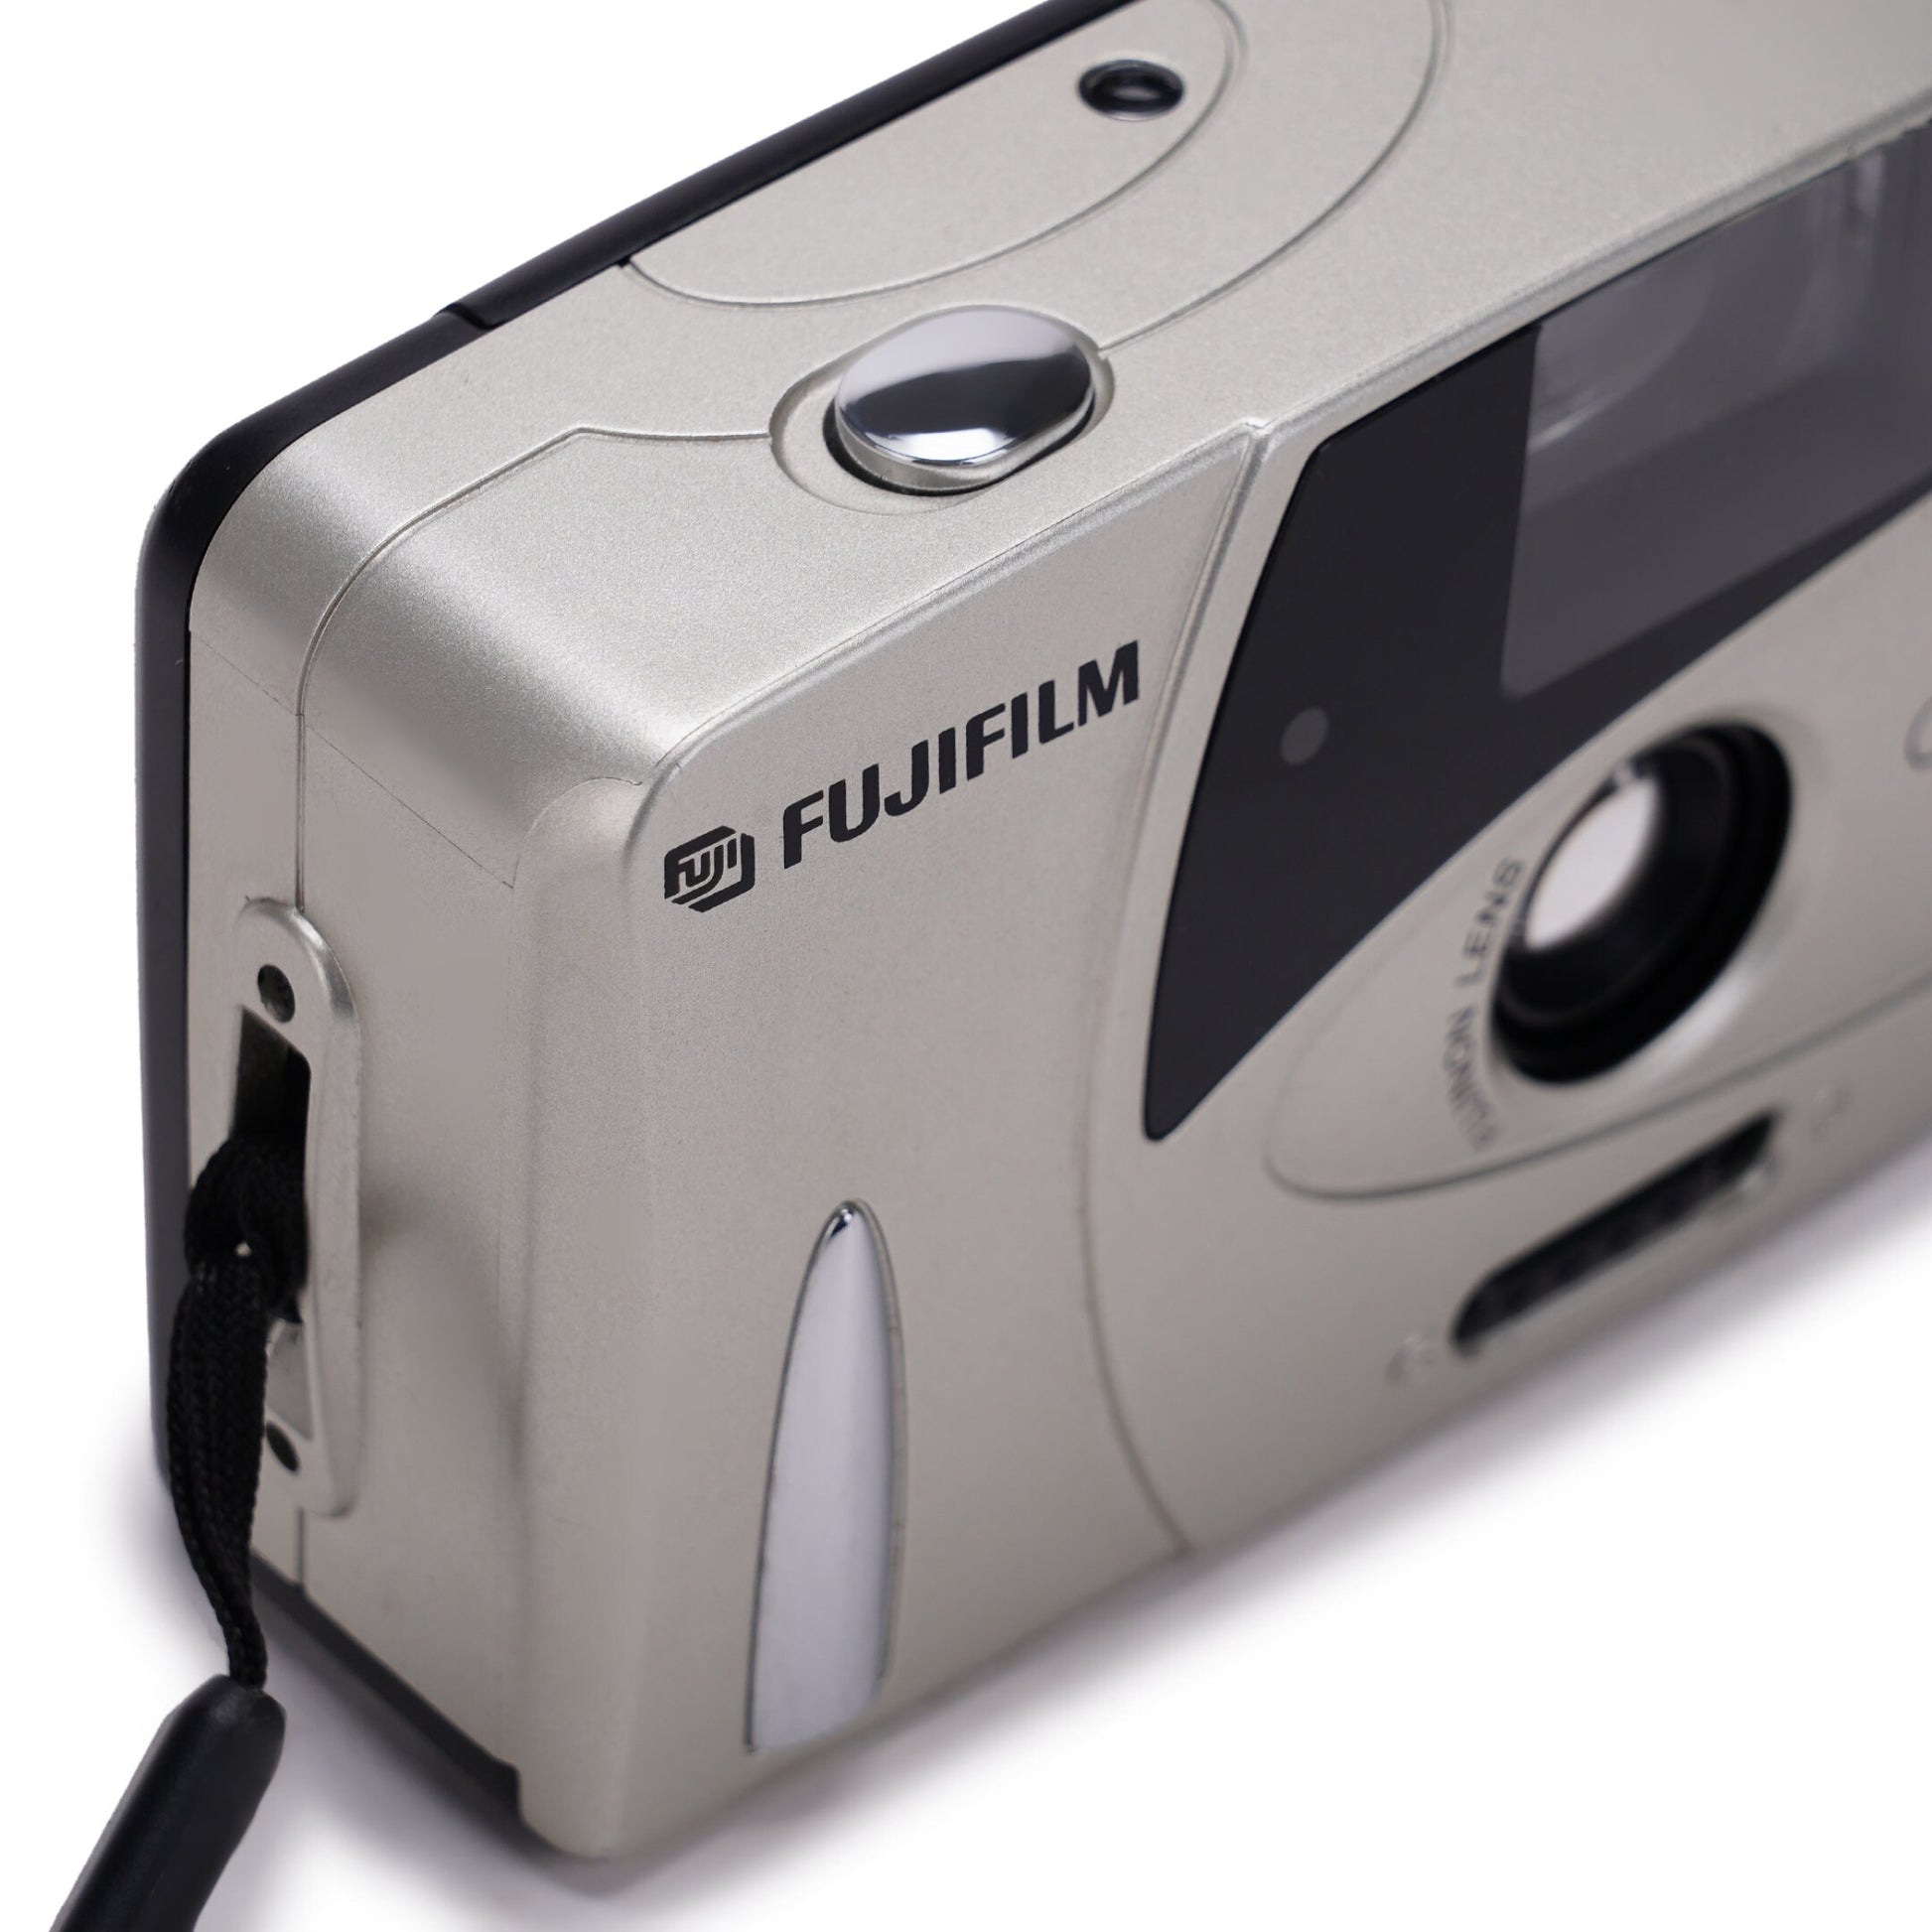 NEW ARRIVAL!! Vingtage Fujifilm Camera, Working Film Camera, Best gift Camera - Vintage Polaroid Instant Cameras